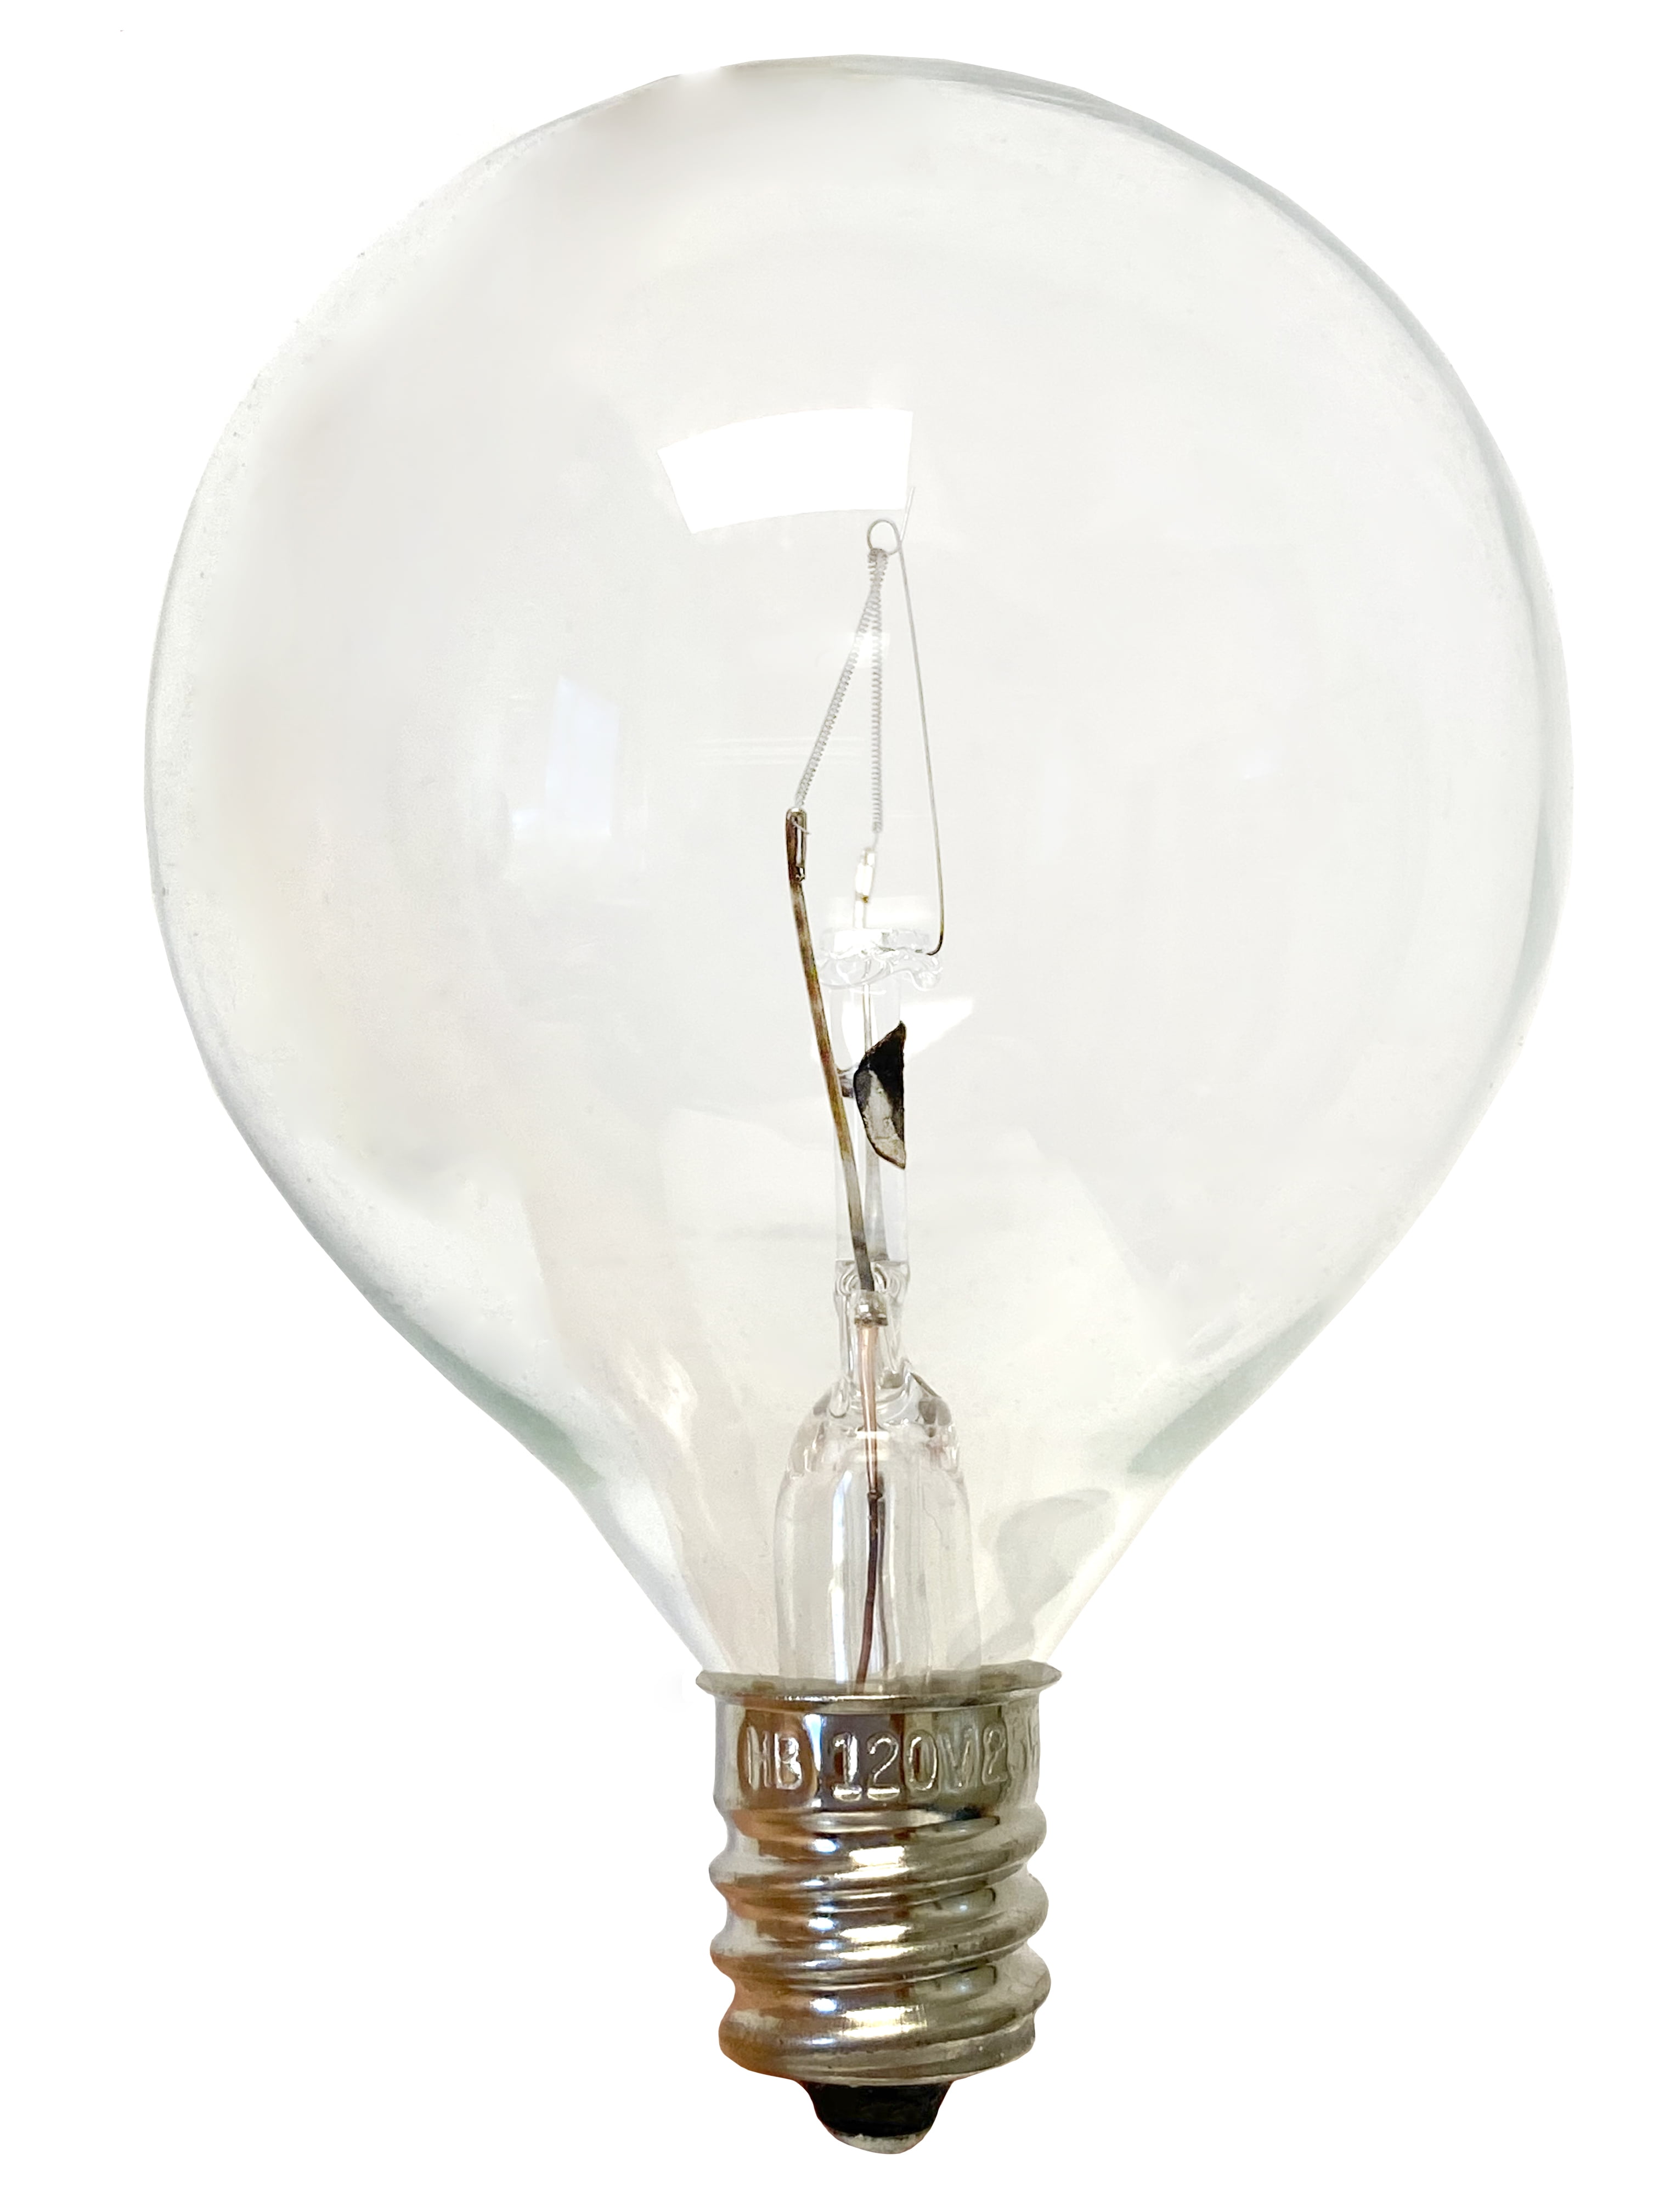 Simba Lighting® Scentsy Wax Warmer G16.5 Round Bulb 25W E12 Candelabra Base  Clear Glass